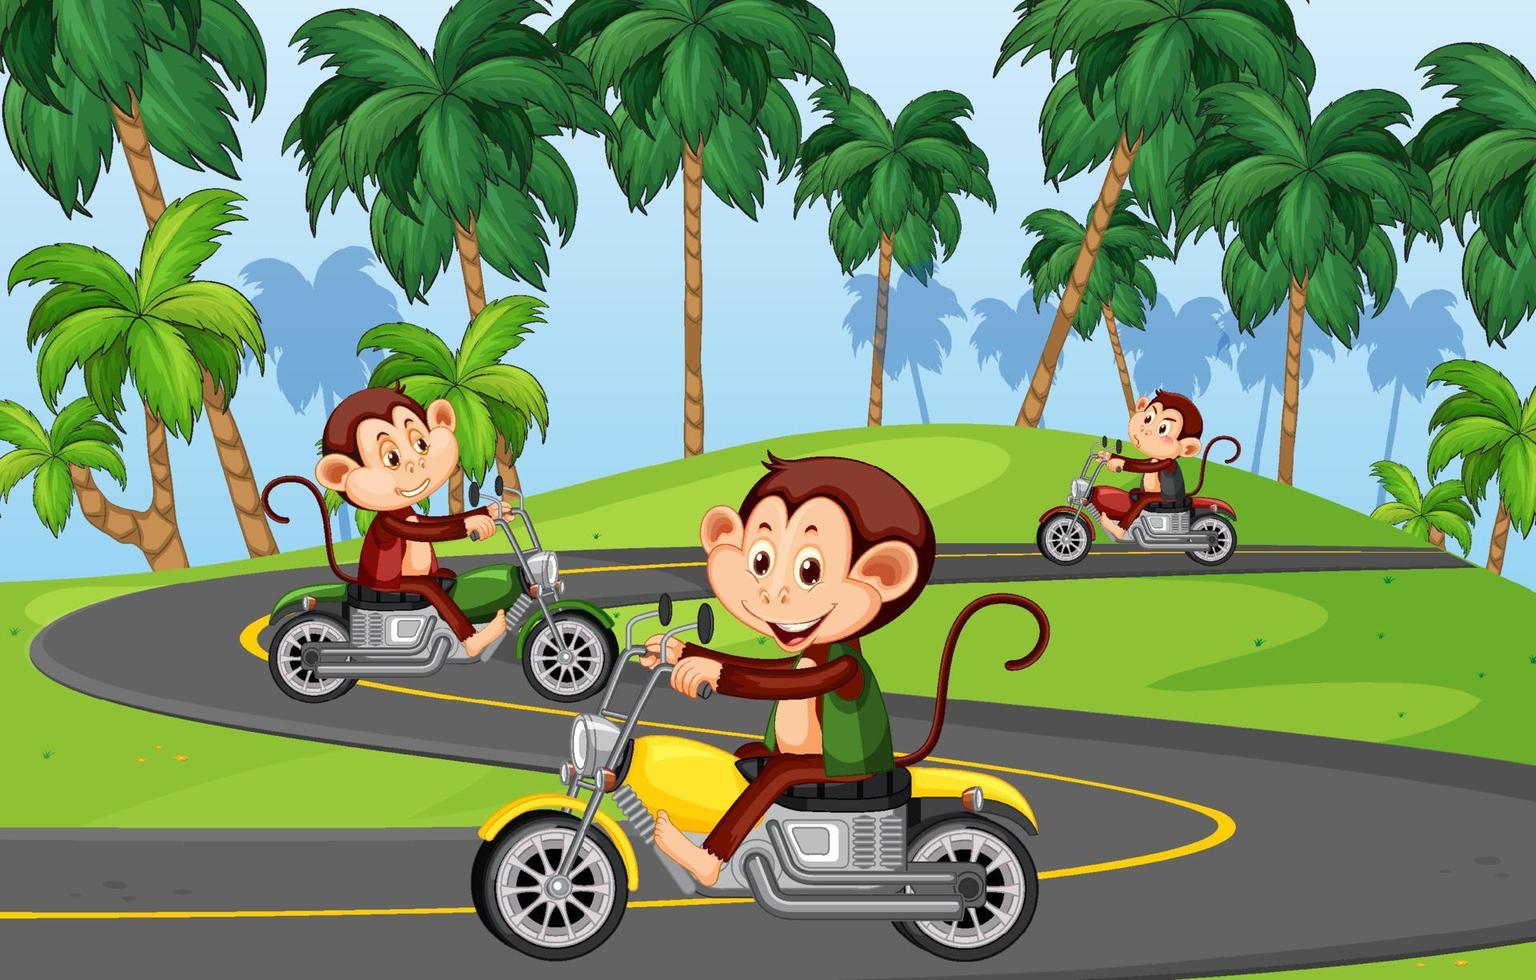 Escena de pista de carreras con monos montando motocicletas. vector